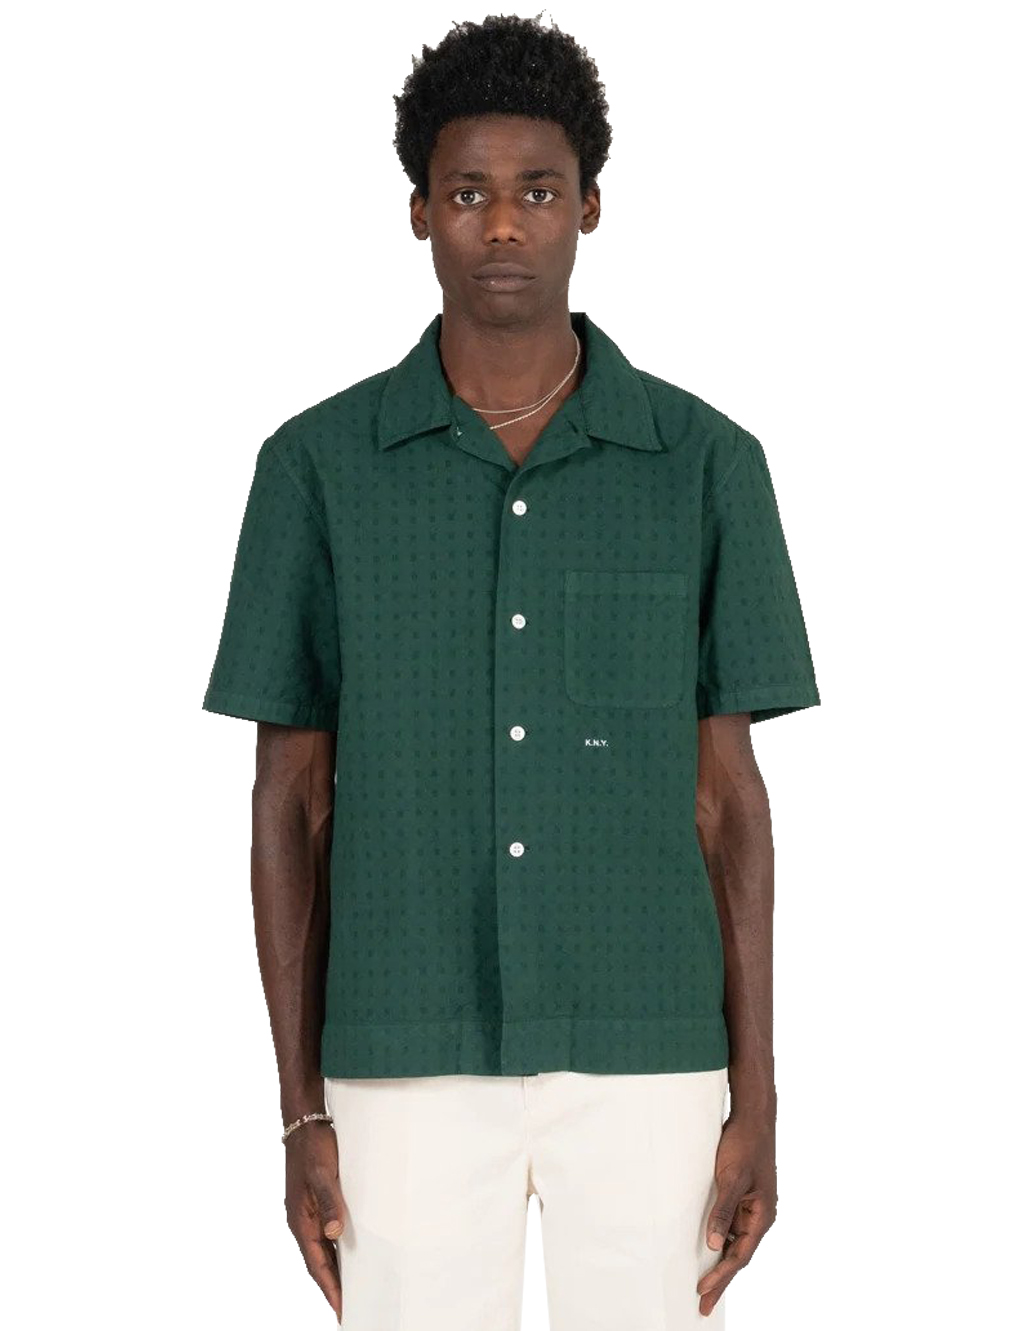 Knickerbocker - Check Shirt - Green